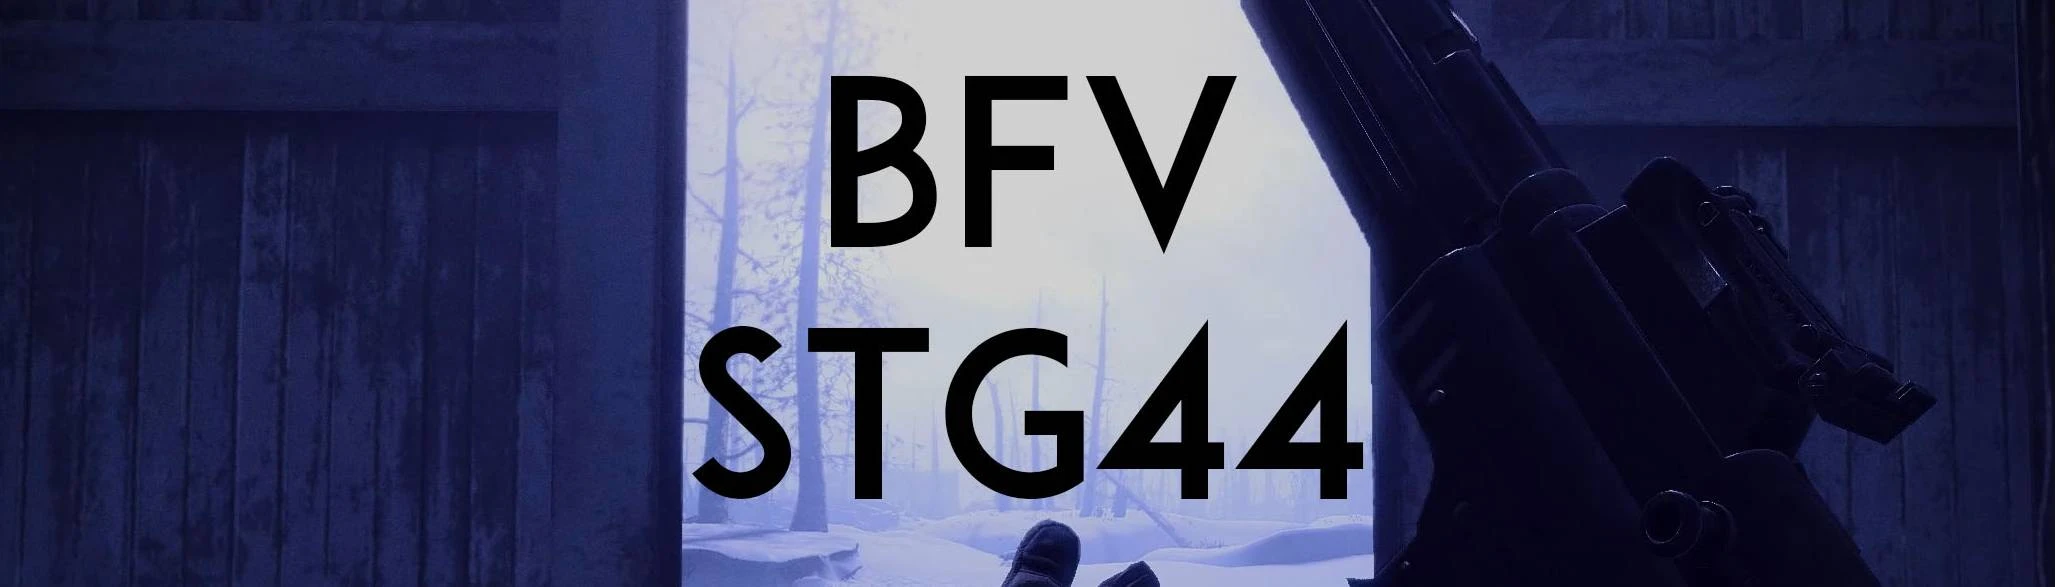 BFV STATS